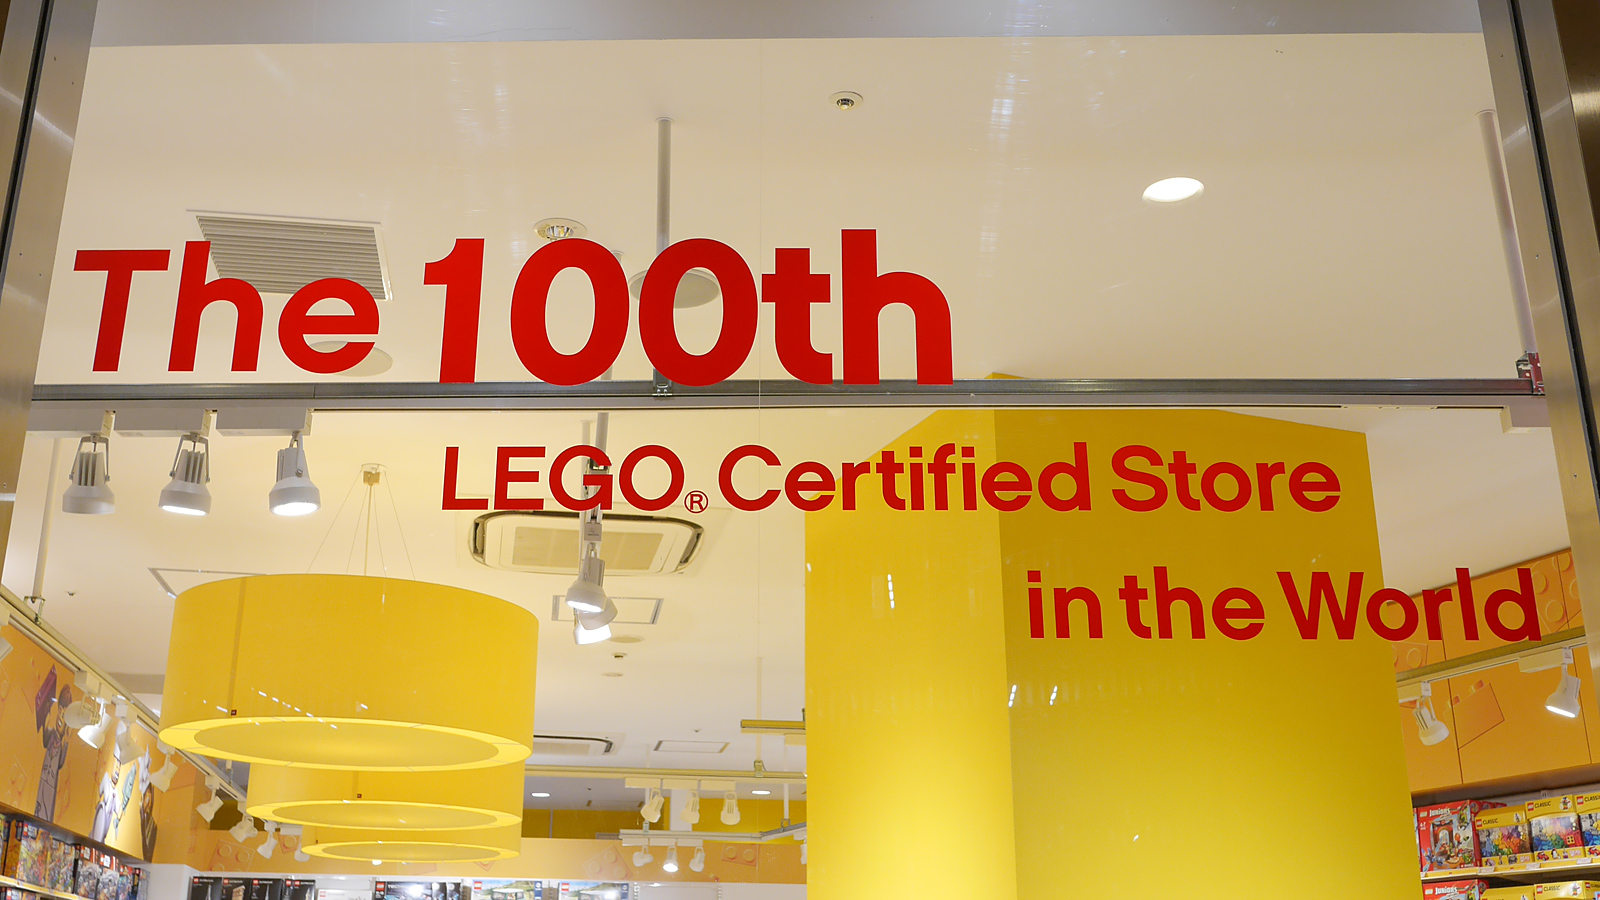 LegoStore201602_03.jpg